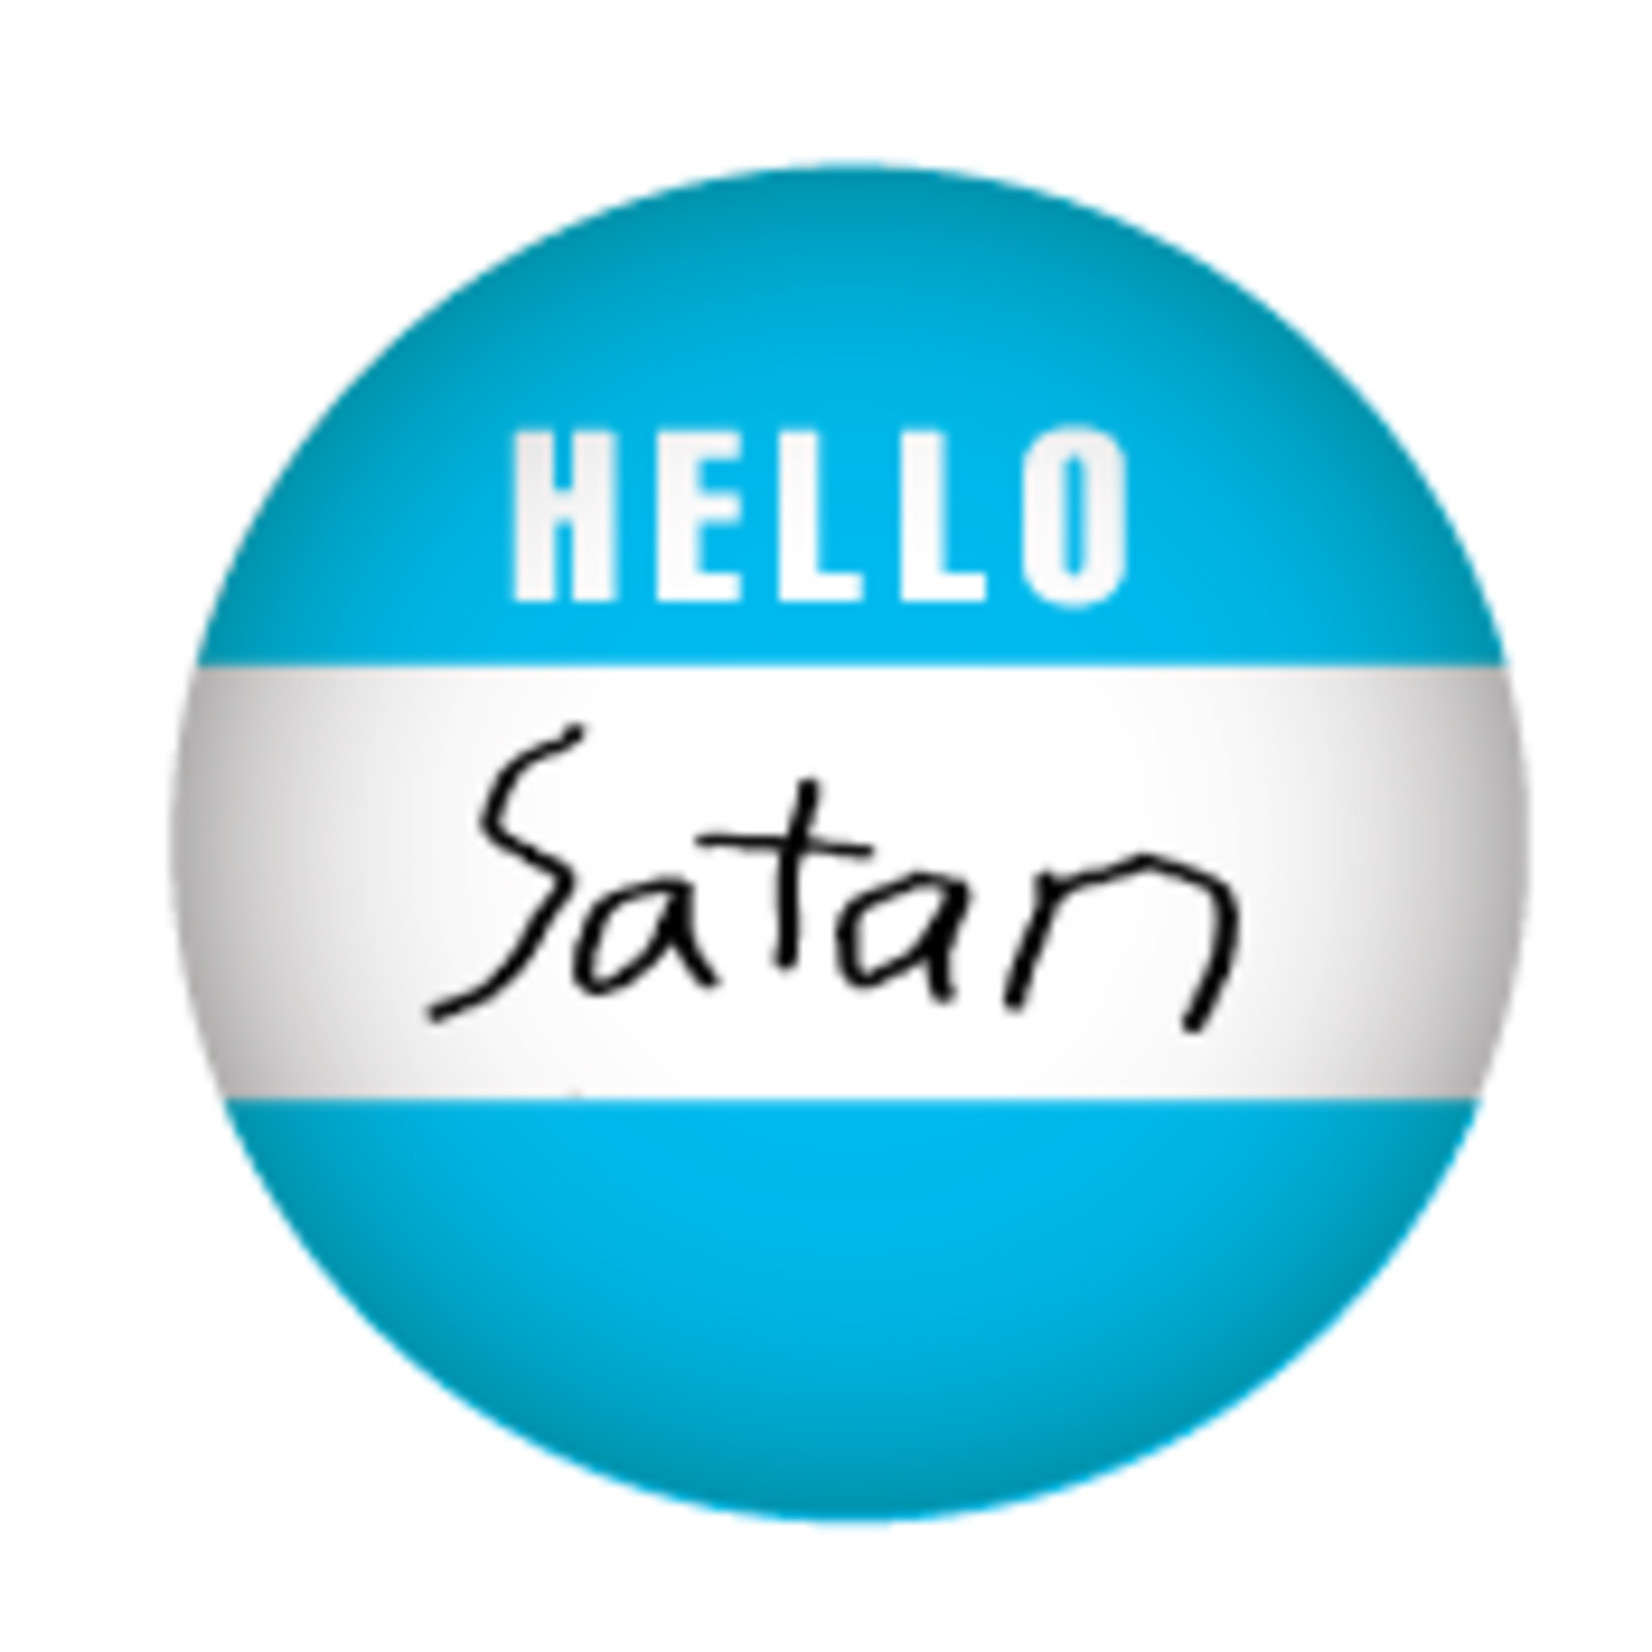 Magnet - Hello Satan